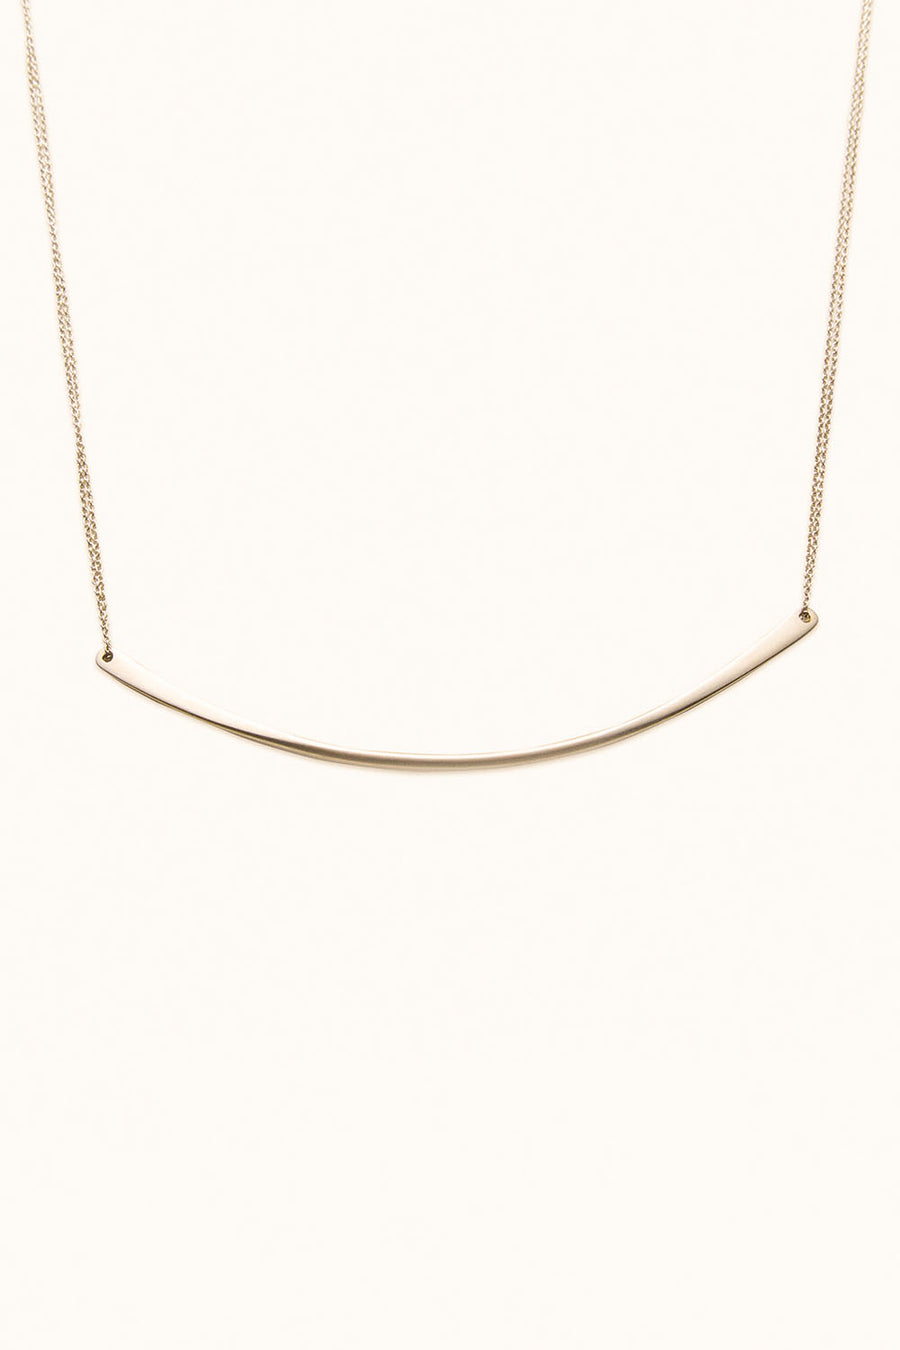 HELENA ROHNER - Fine Brass Bar Necklace in Gold